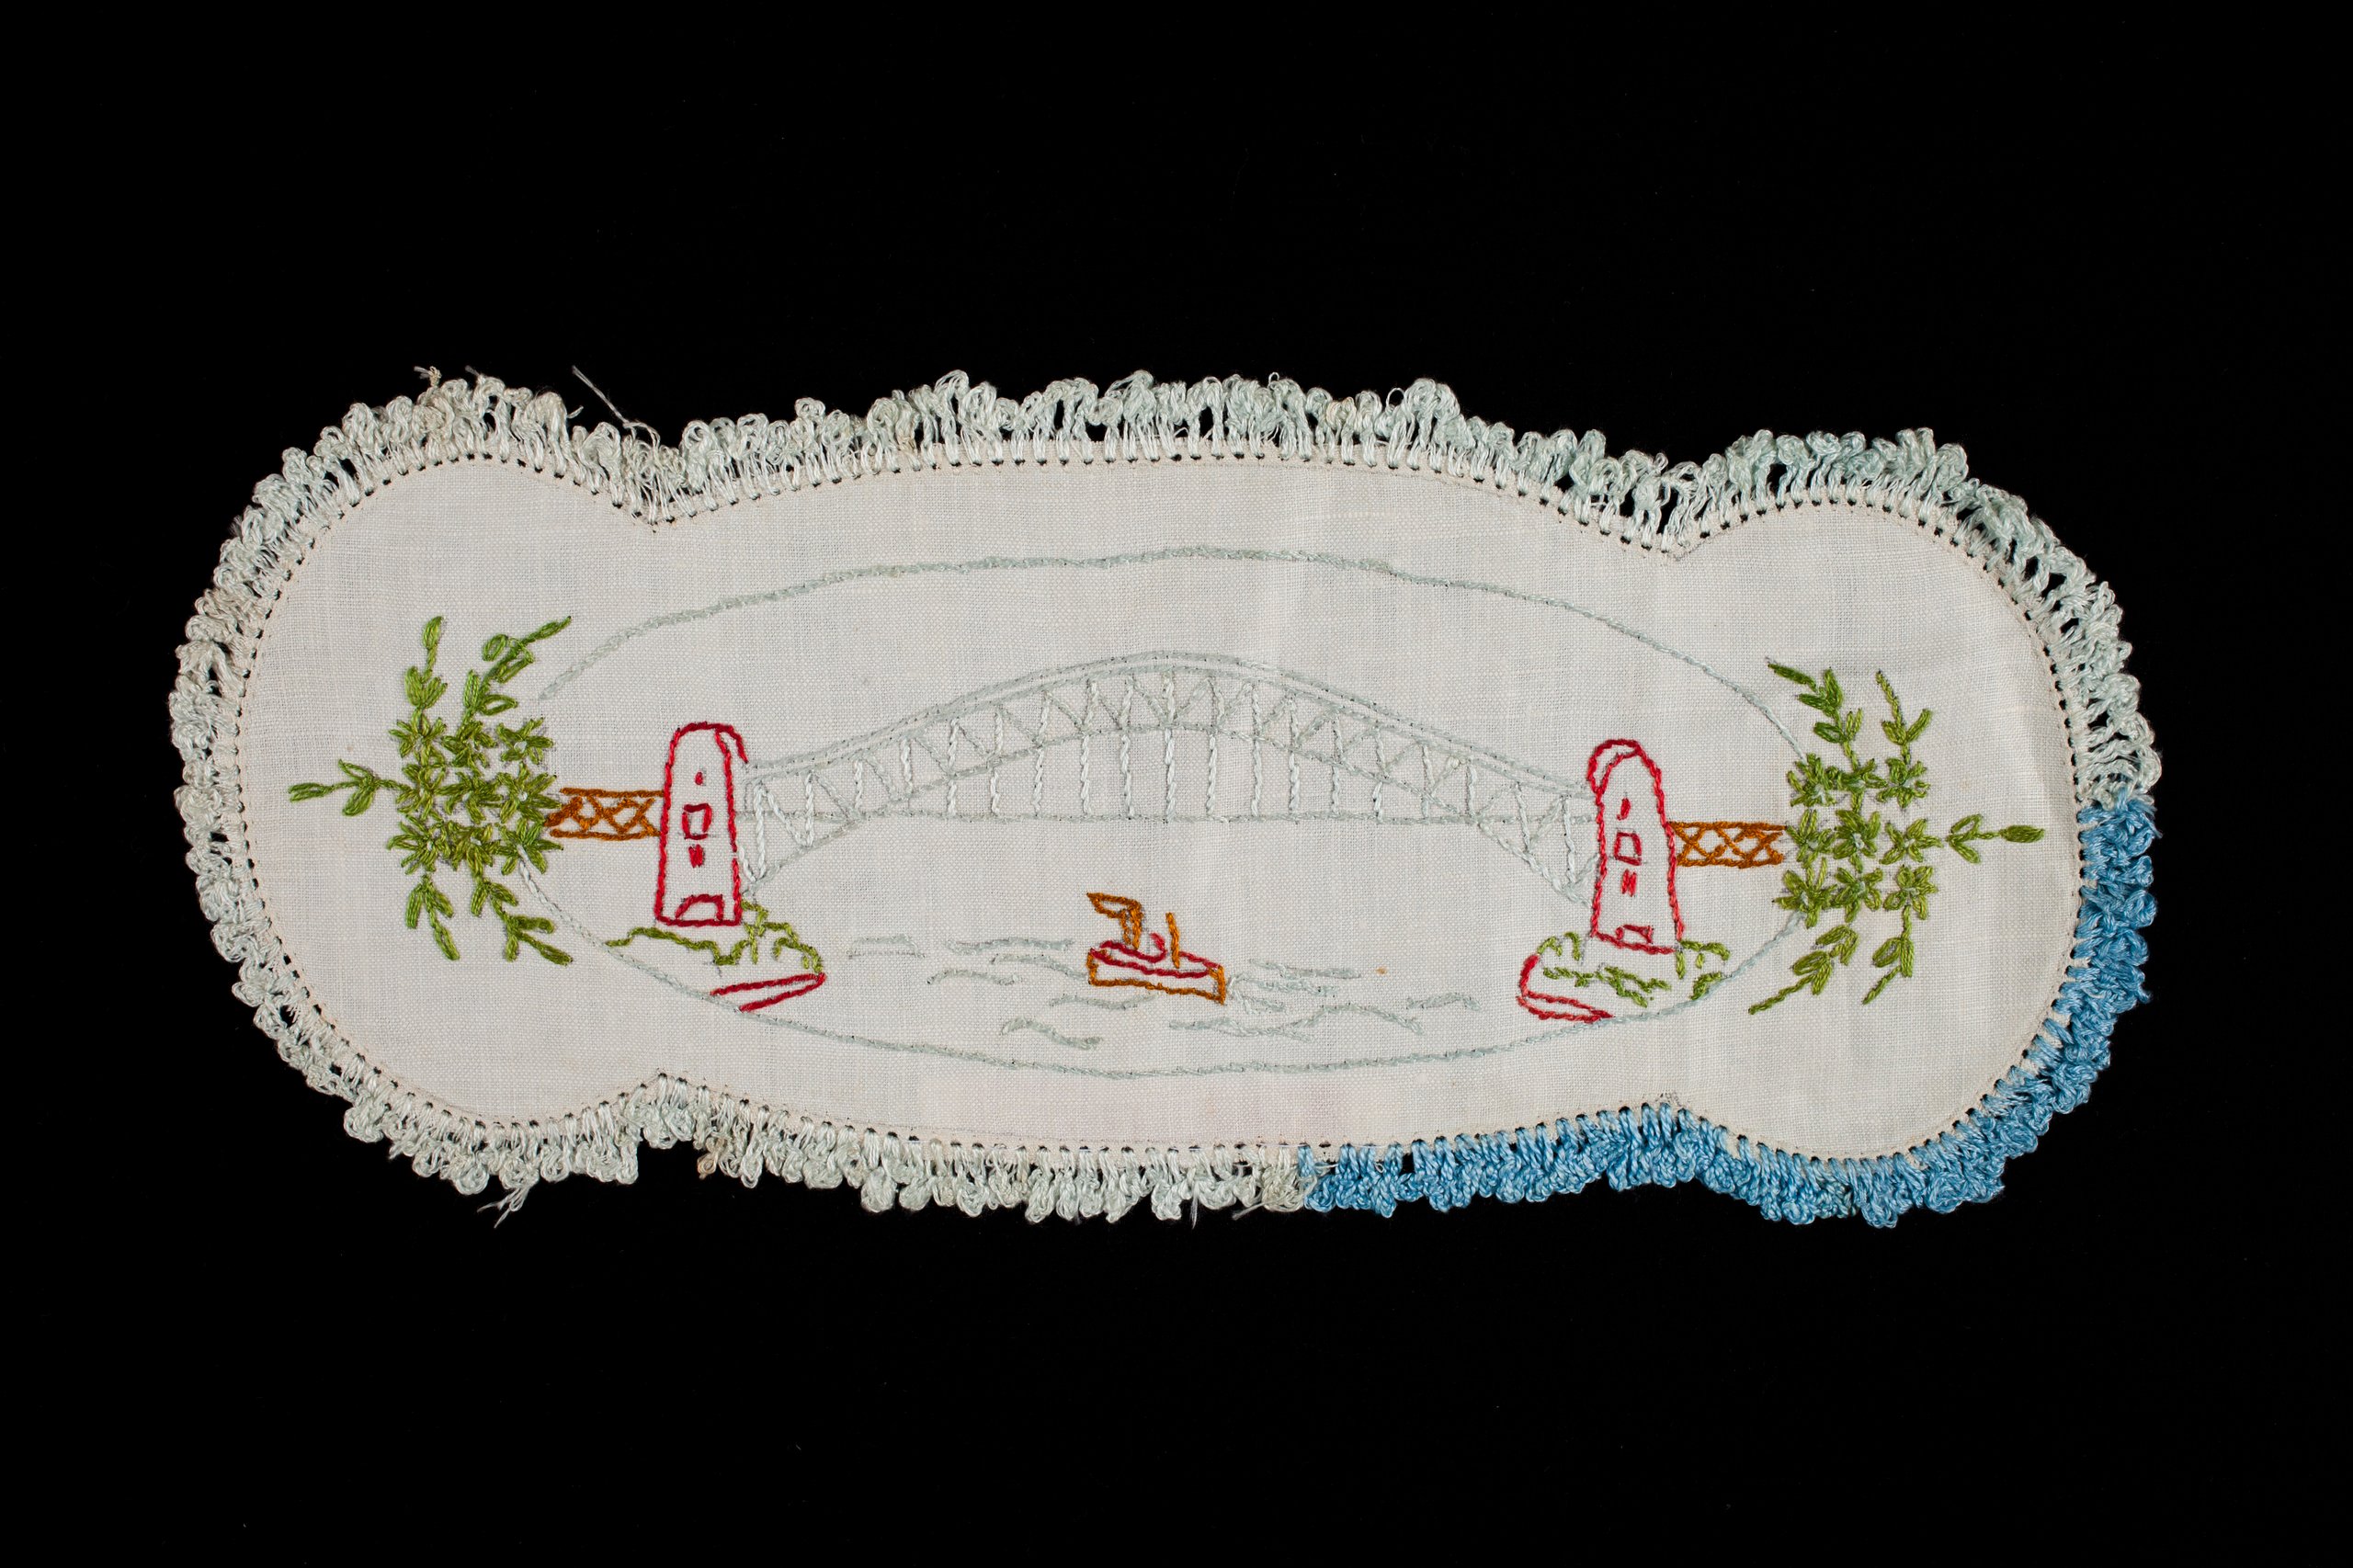 Embroidered sandwich doily, 'Sydney Harbour Bridge'